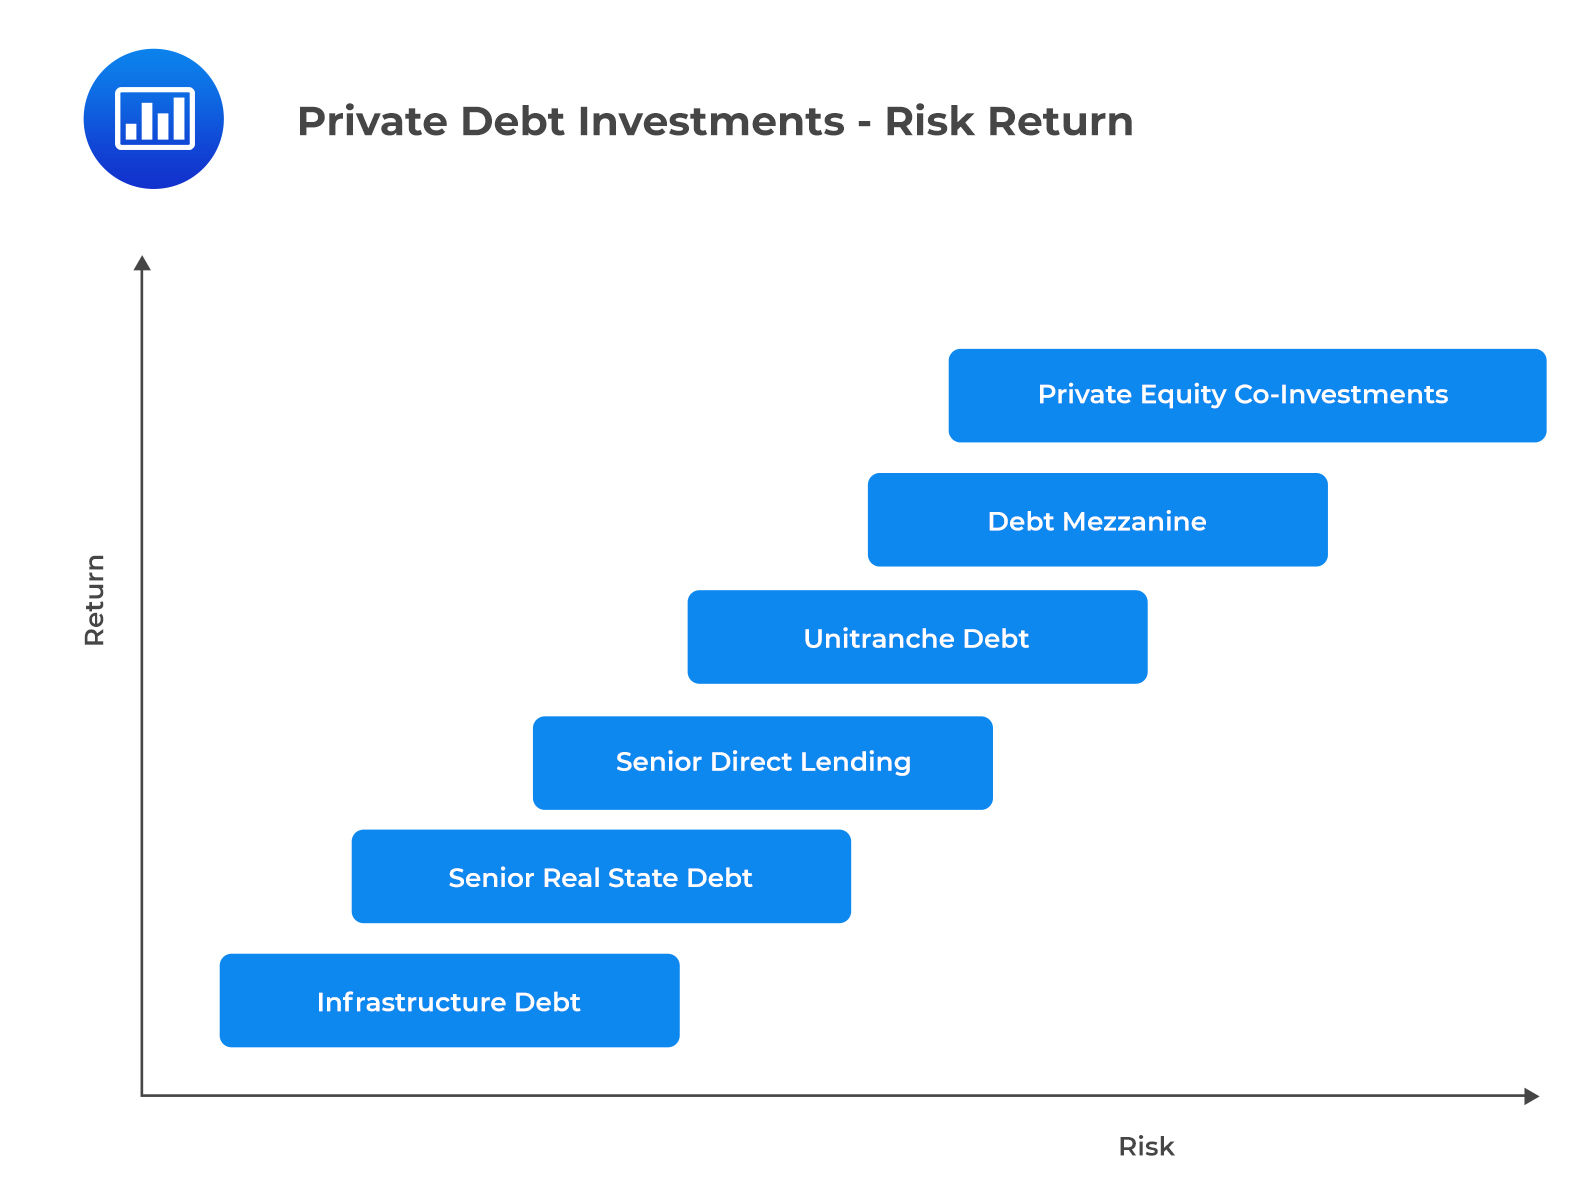 Private debt investments - Risk Return